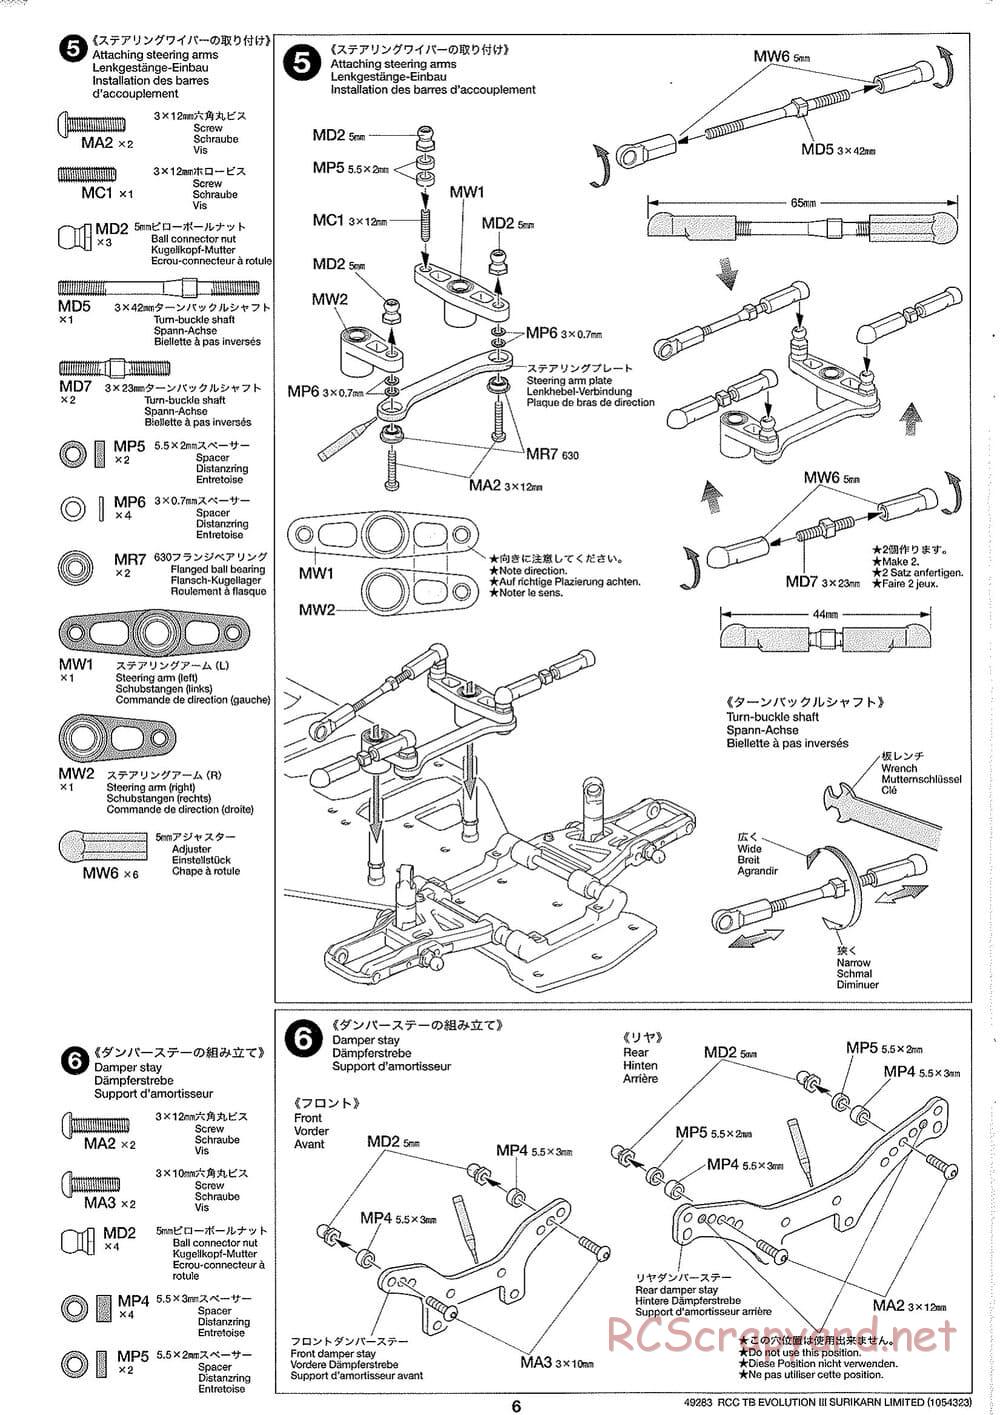 Tamiya - TB Evolution III Surikarn Limited Chassis - Manual - Page 6